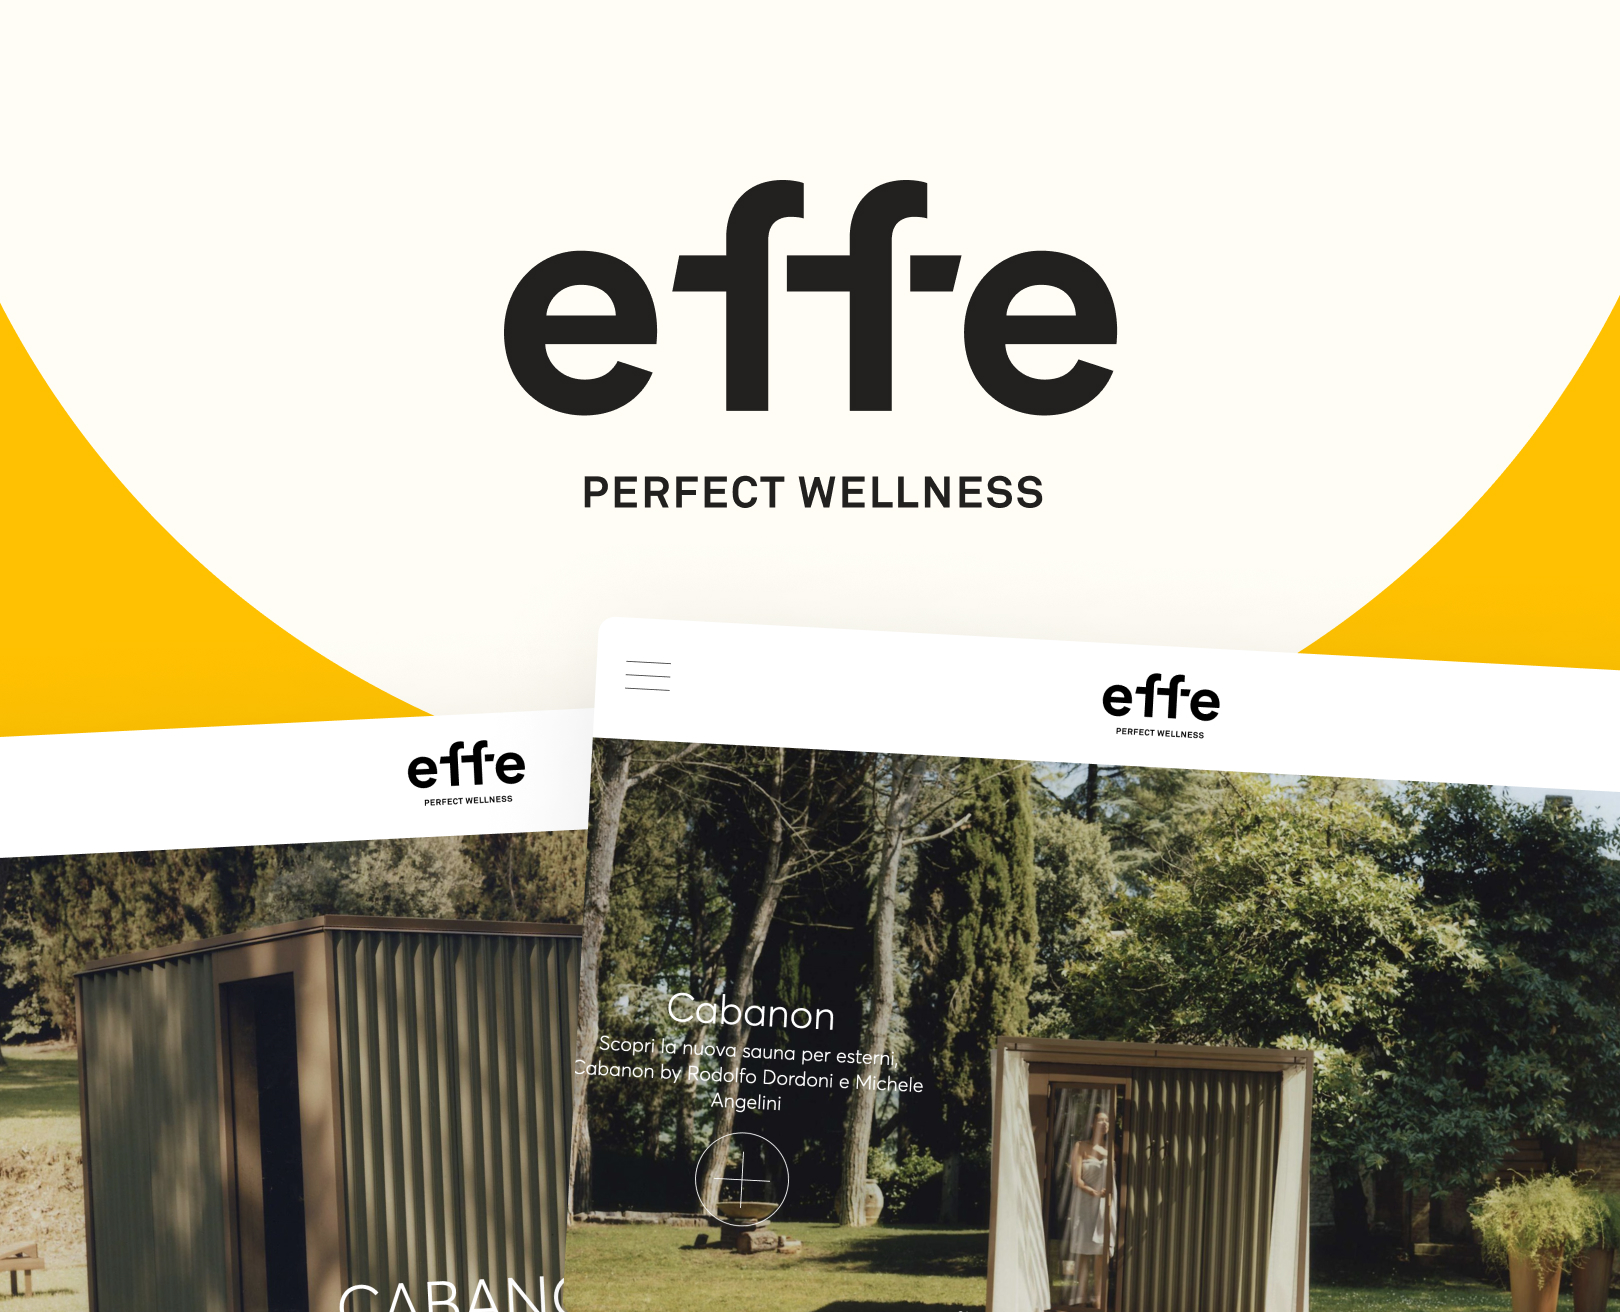 Effe Perfect Wellness